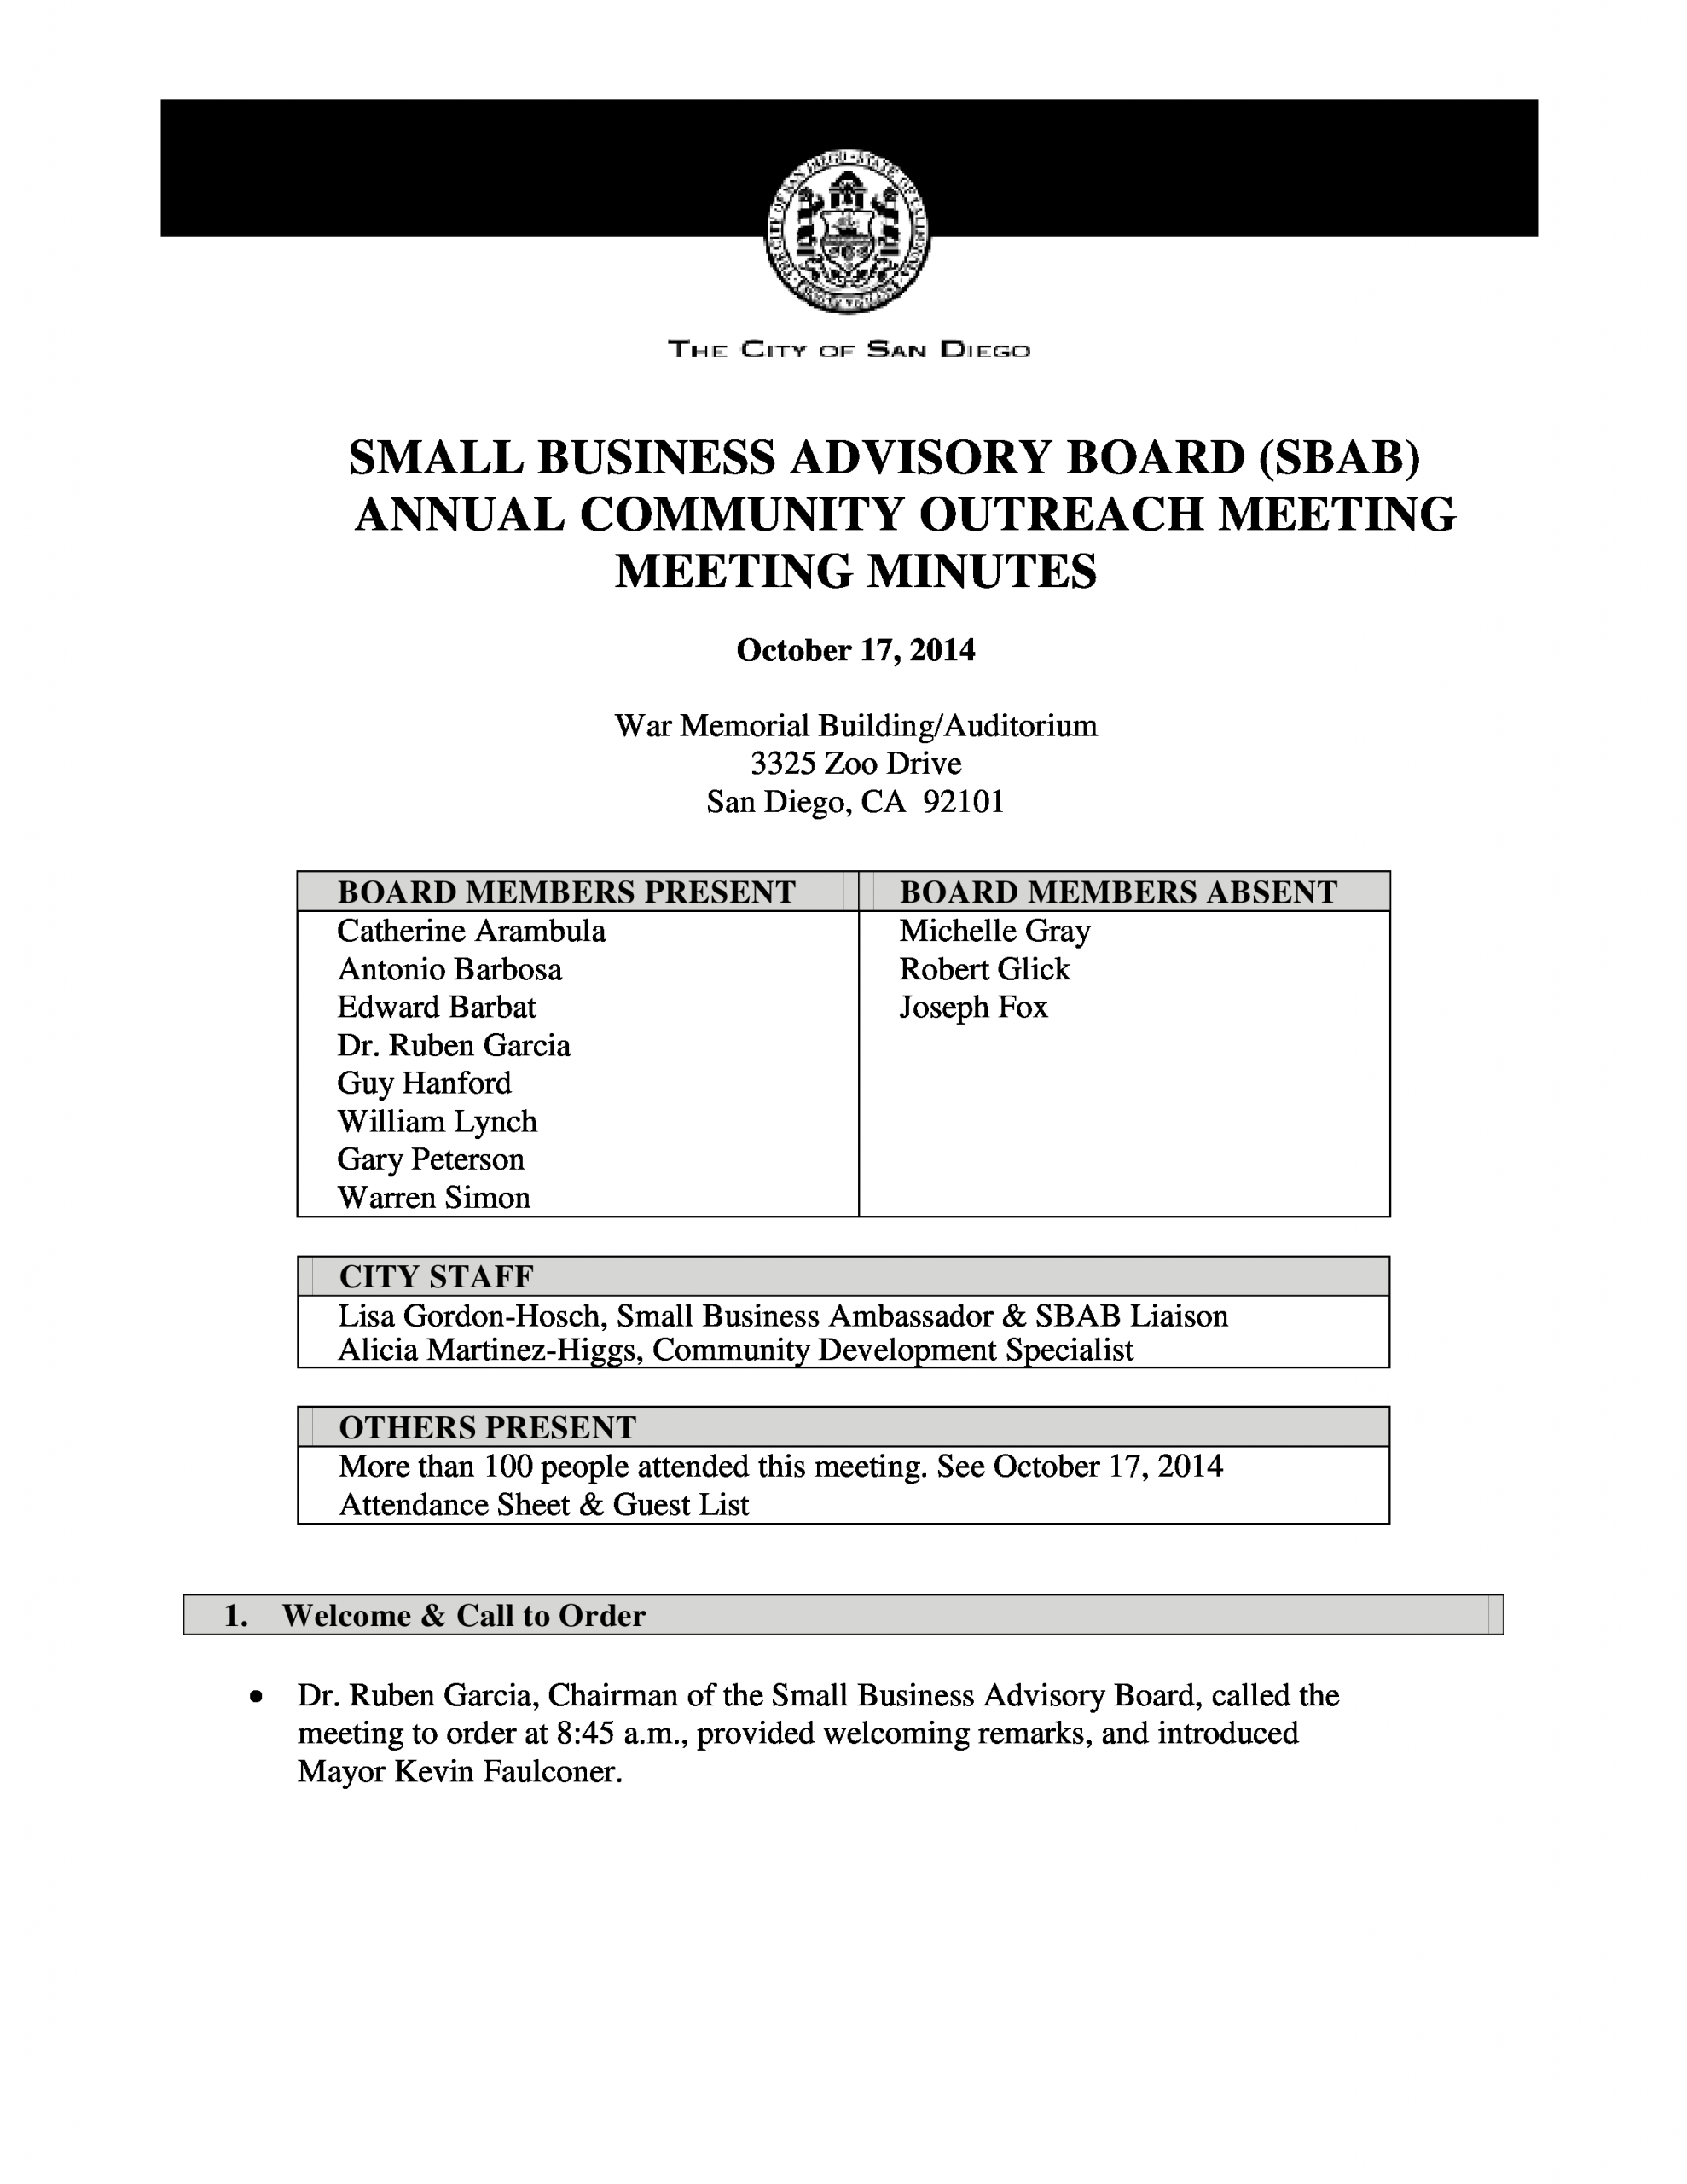 Annual Meeting Minutes Template Llc • Invitation Template ...